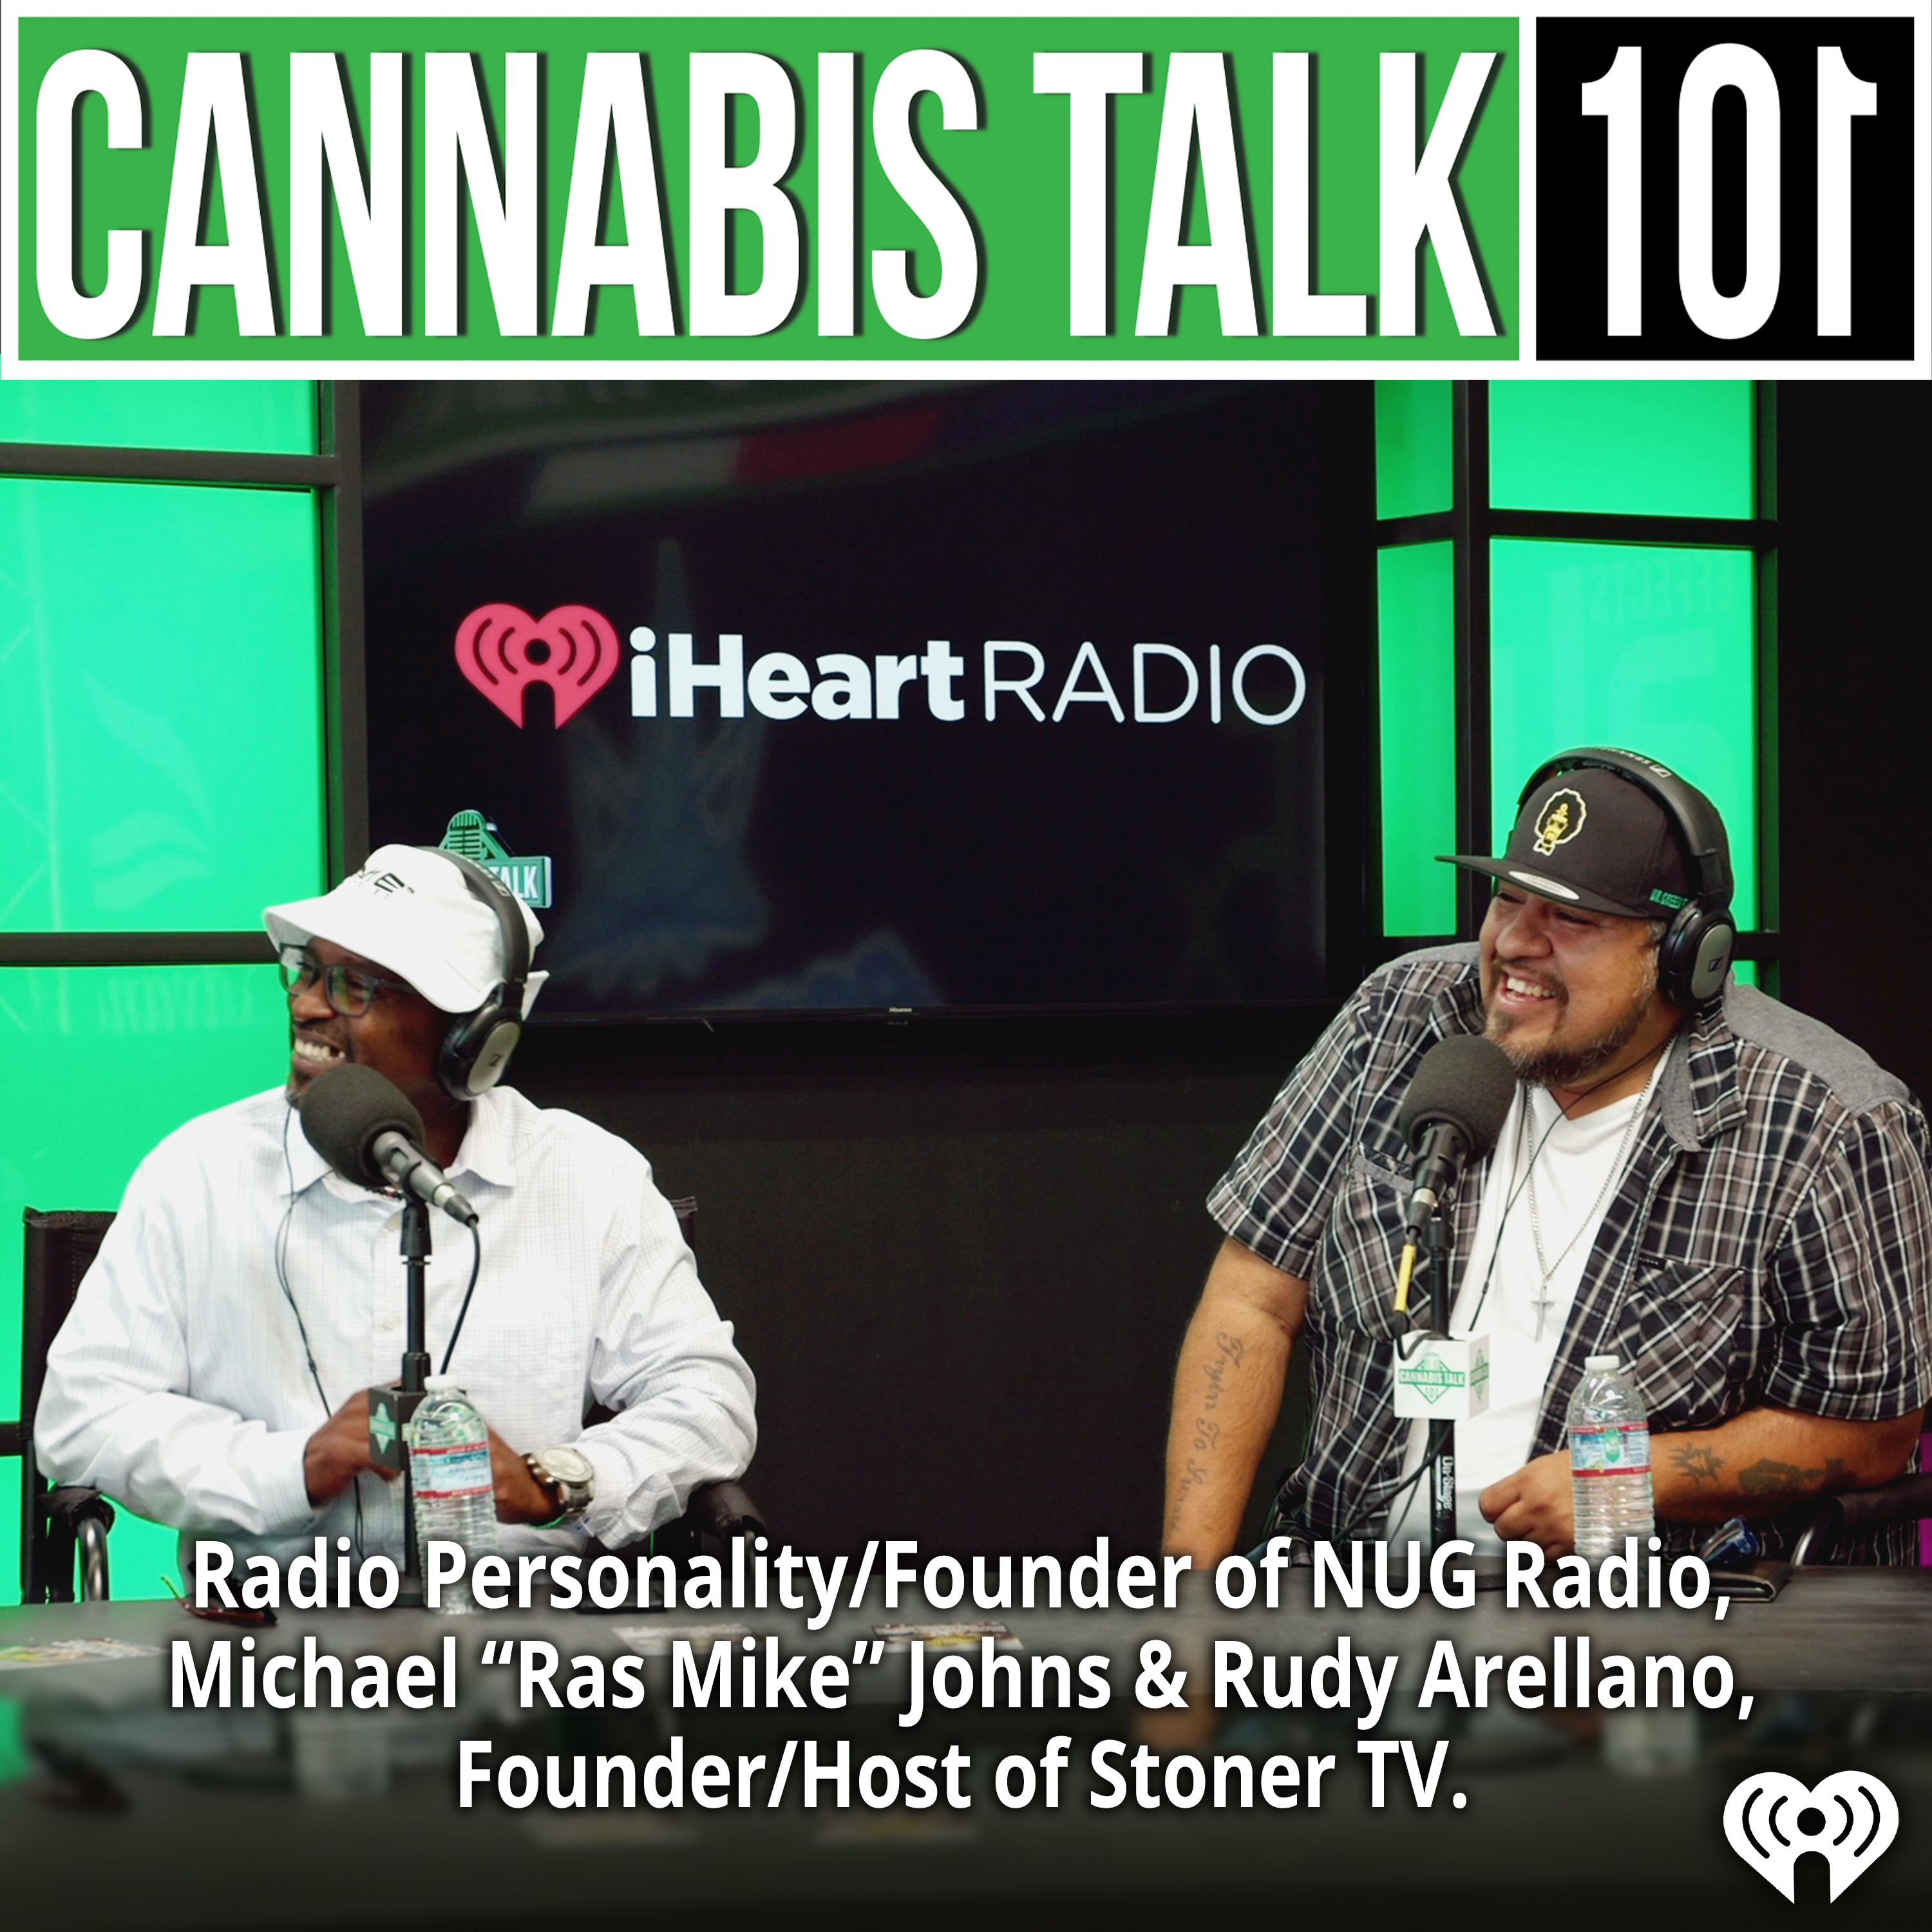 Radio Personality/Founder of NUG Radio, Michael “Ras Mike” Johns & Rudy Arellano, Founder/Host of Stoner TV.